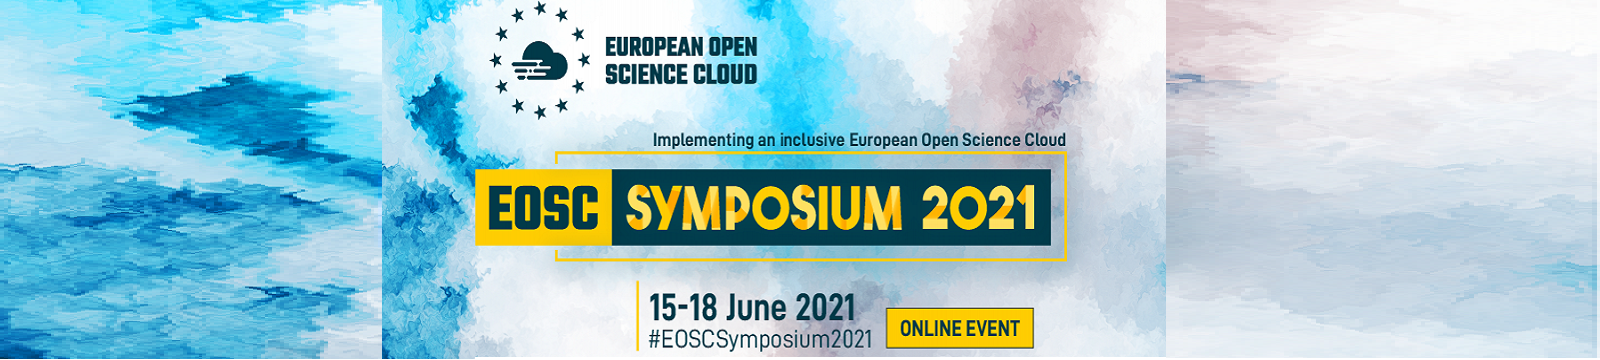 15-18 June, EOSC Symposium 2021 “Implementing an inclusive European Open Science Cloud”